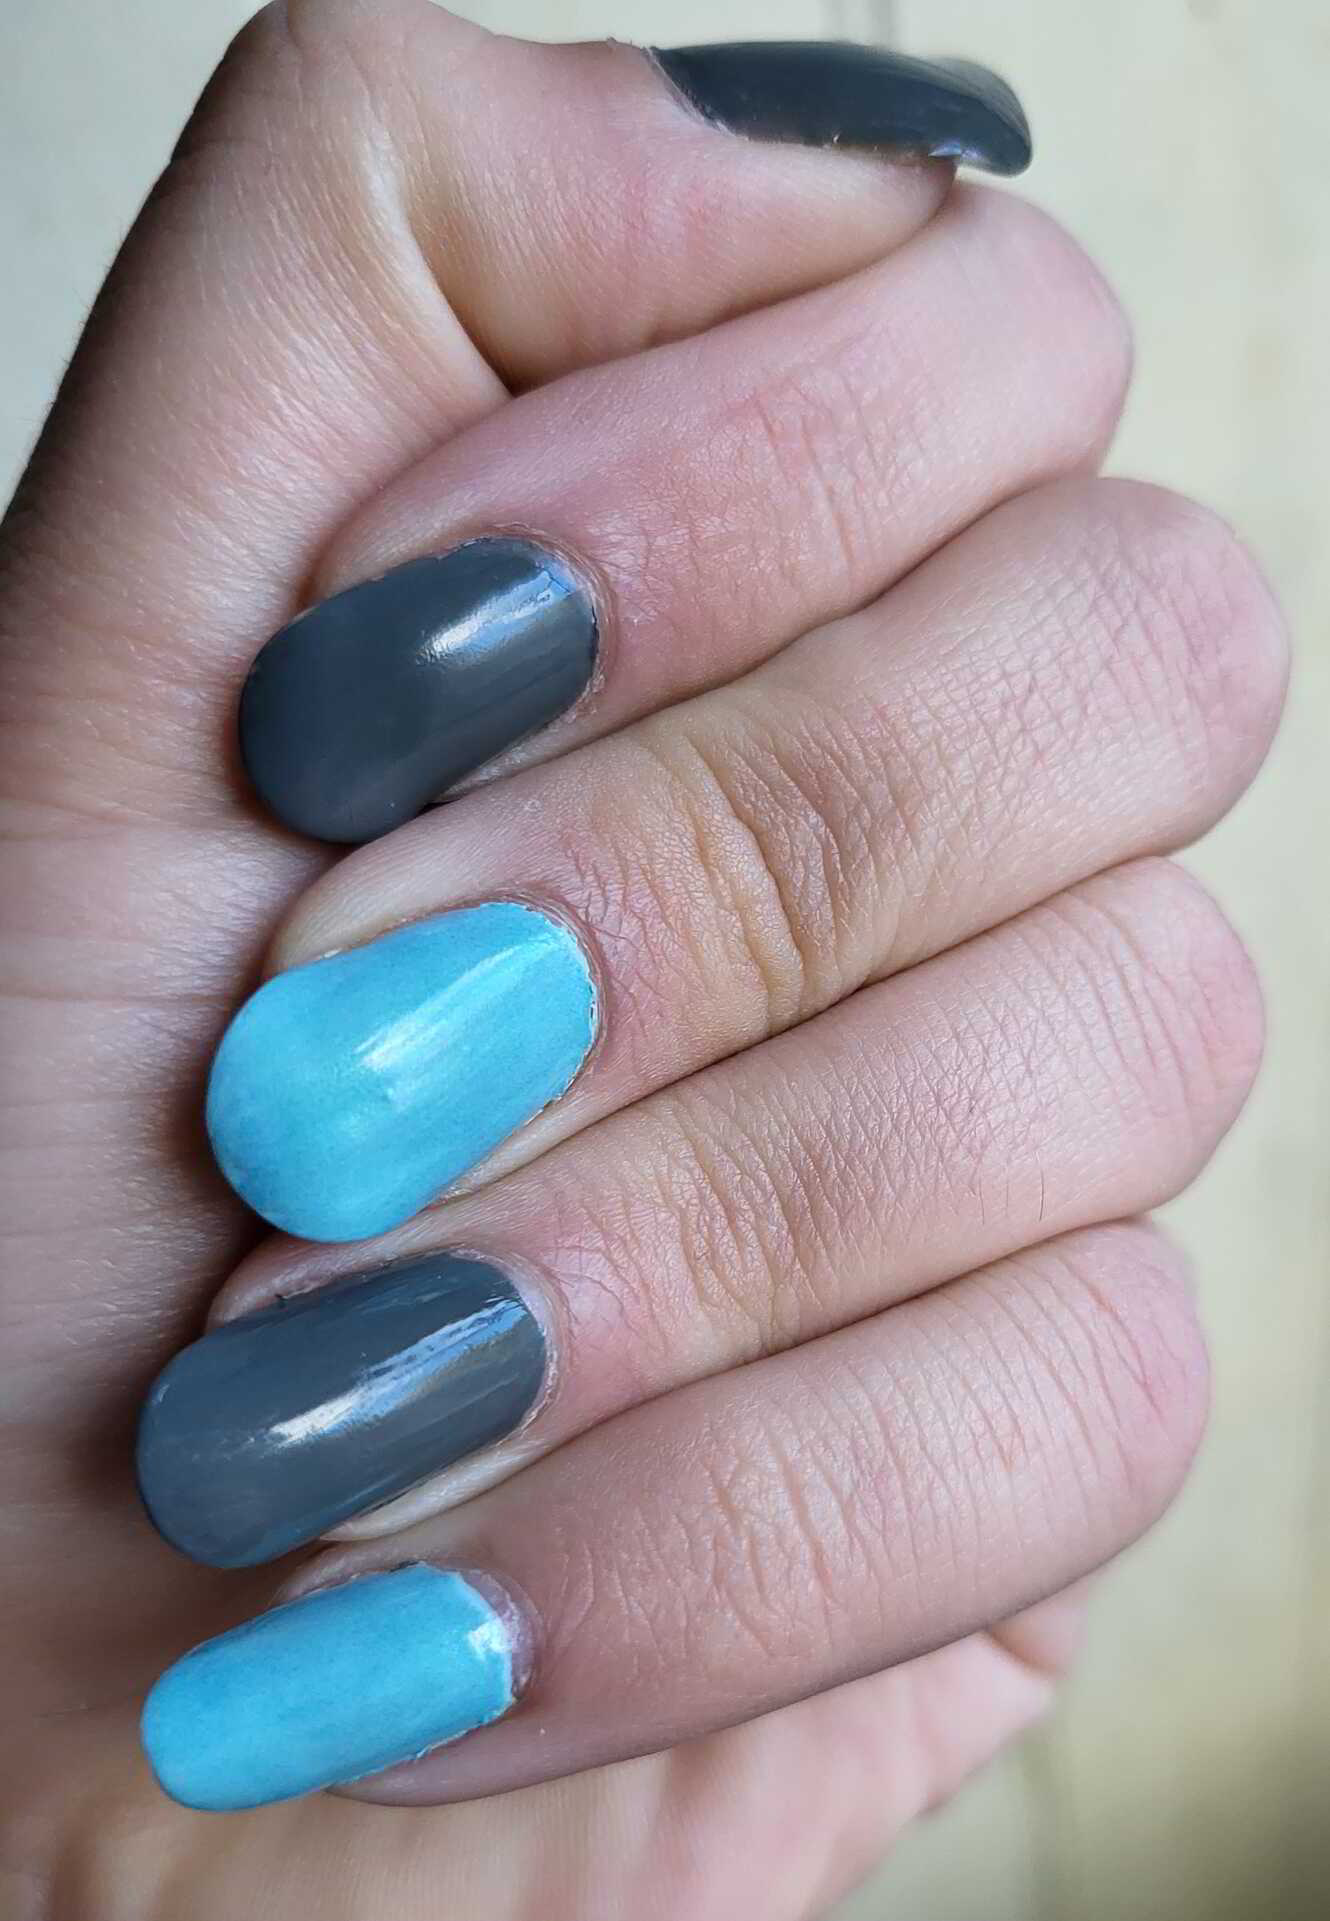 Nail polish manicure of shade OPI Suzi Talks with Her Hands, OPI Suzi Without a Paddle,OPI Sage Simulation,OPI Top Coat